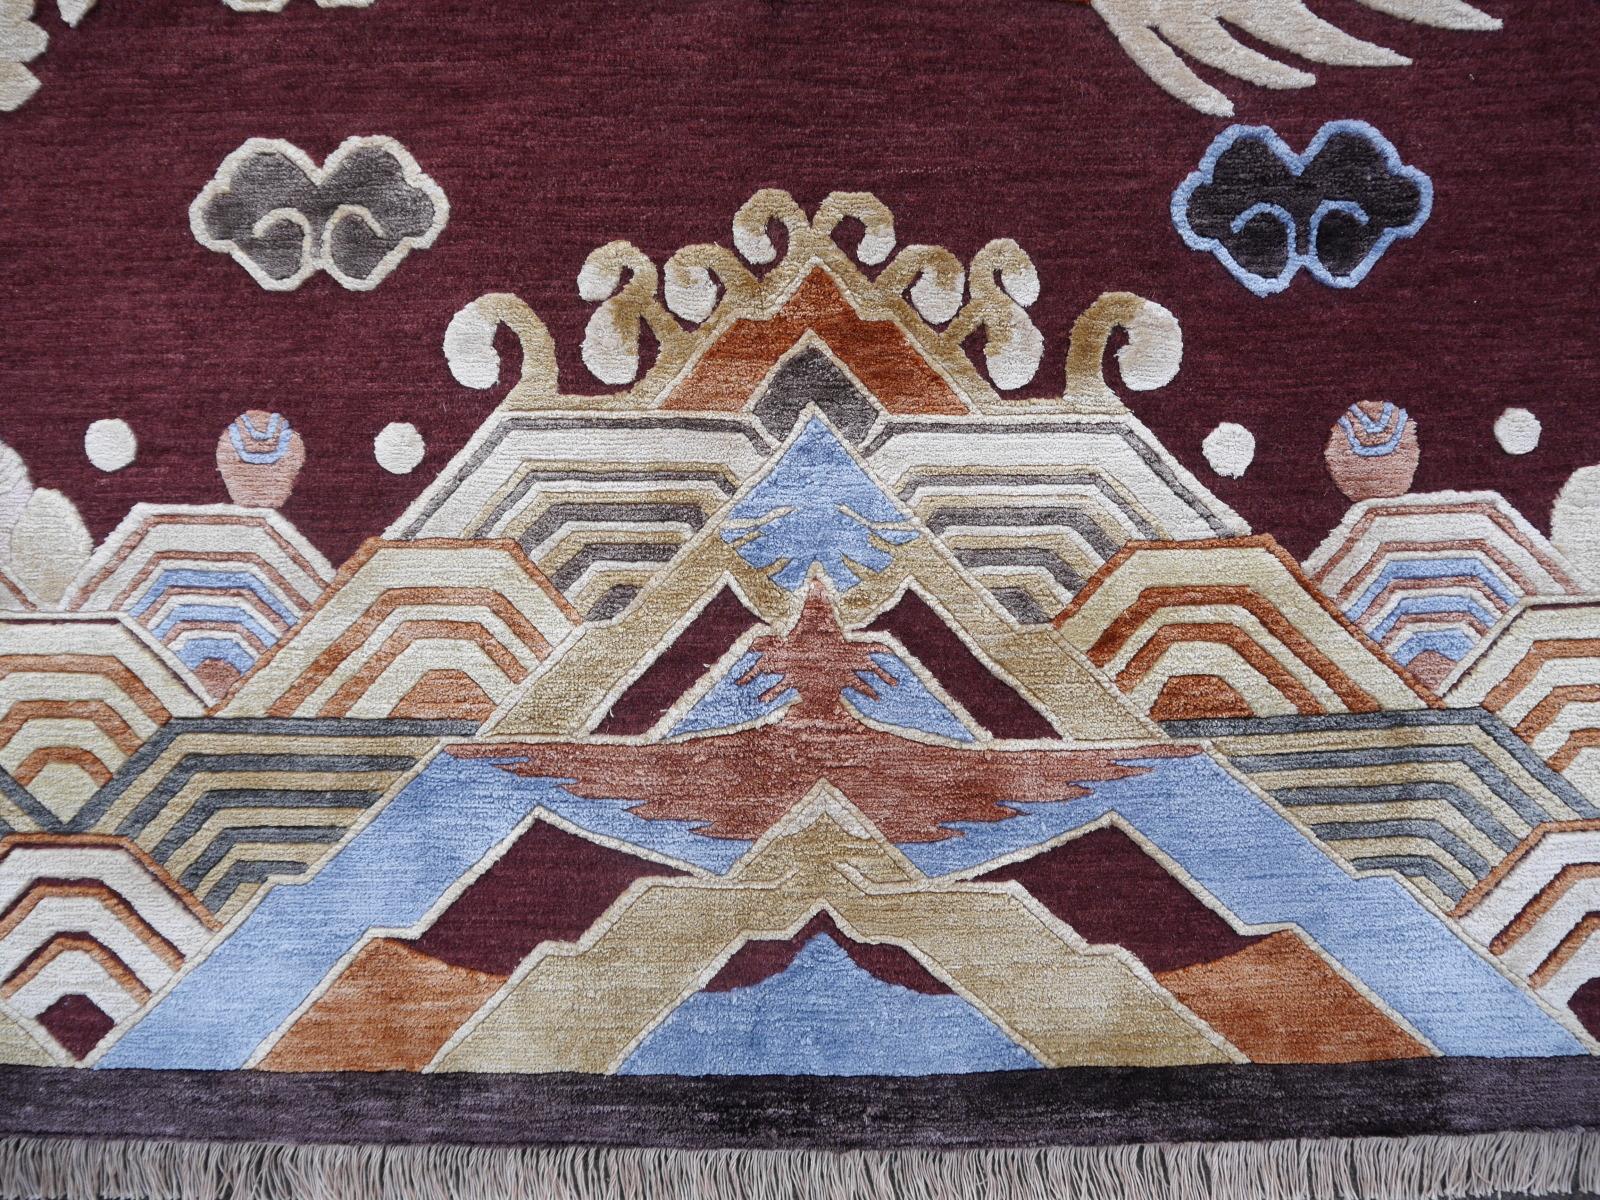 Khotan Dragon Design Rug Wool and Silk in Style of Chinese Kansu Carpets